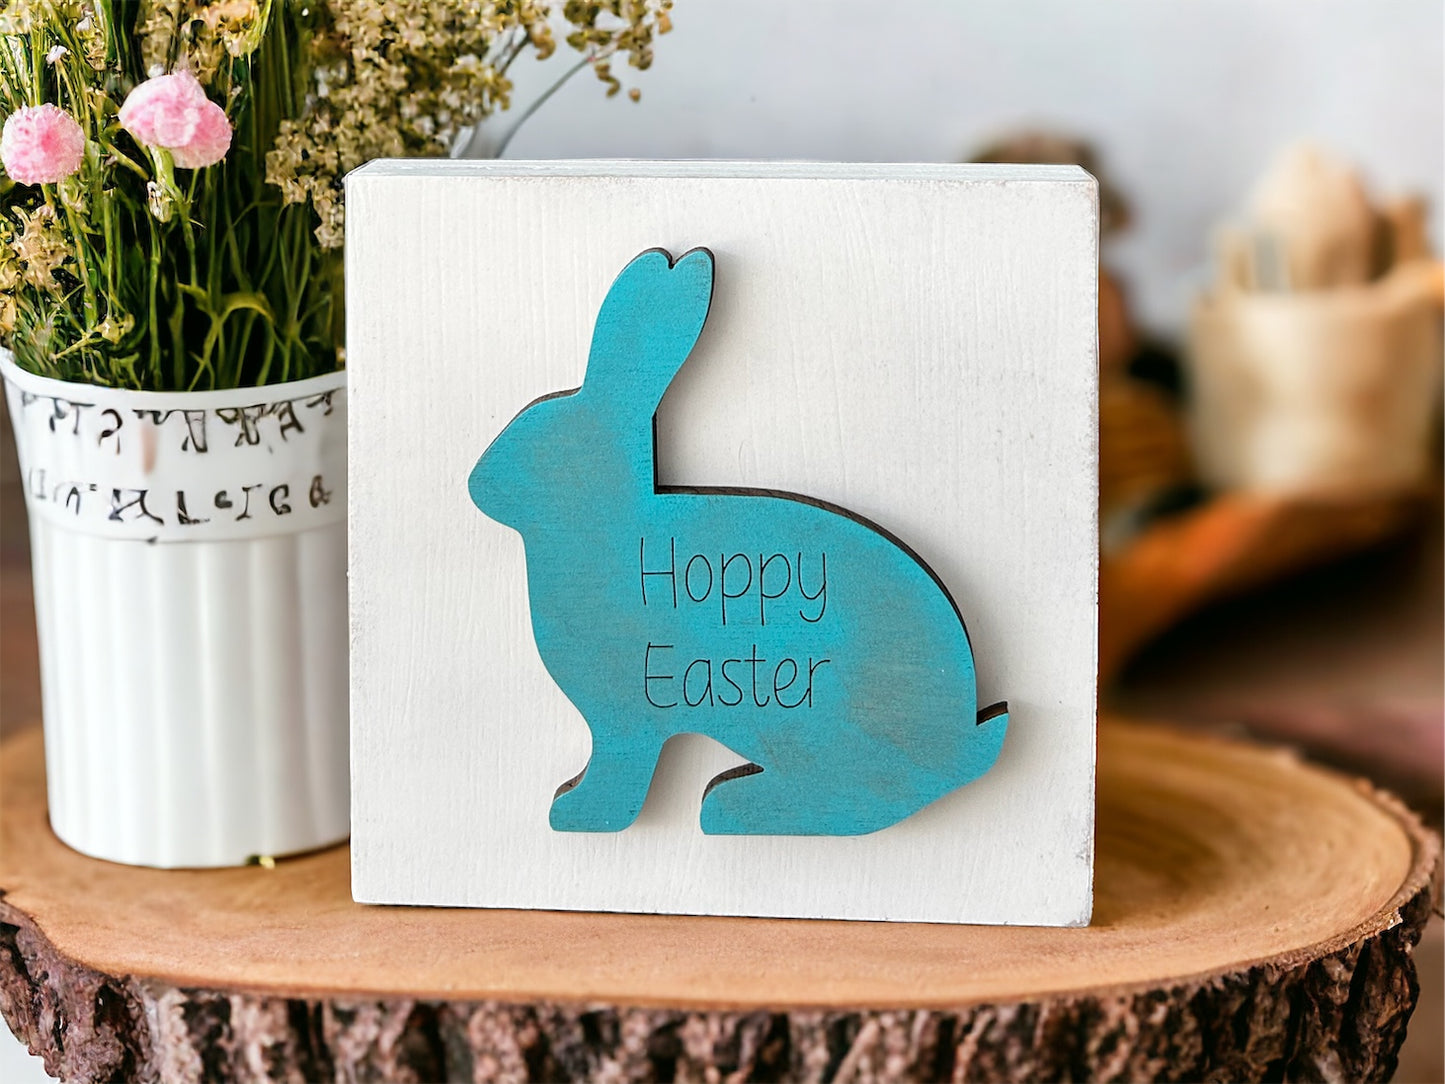 Rustic/Farmhouse “Hoppy Easter” Engraved Bunny Wood Block